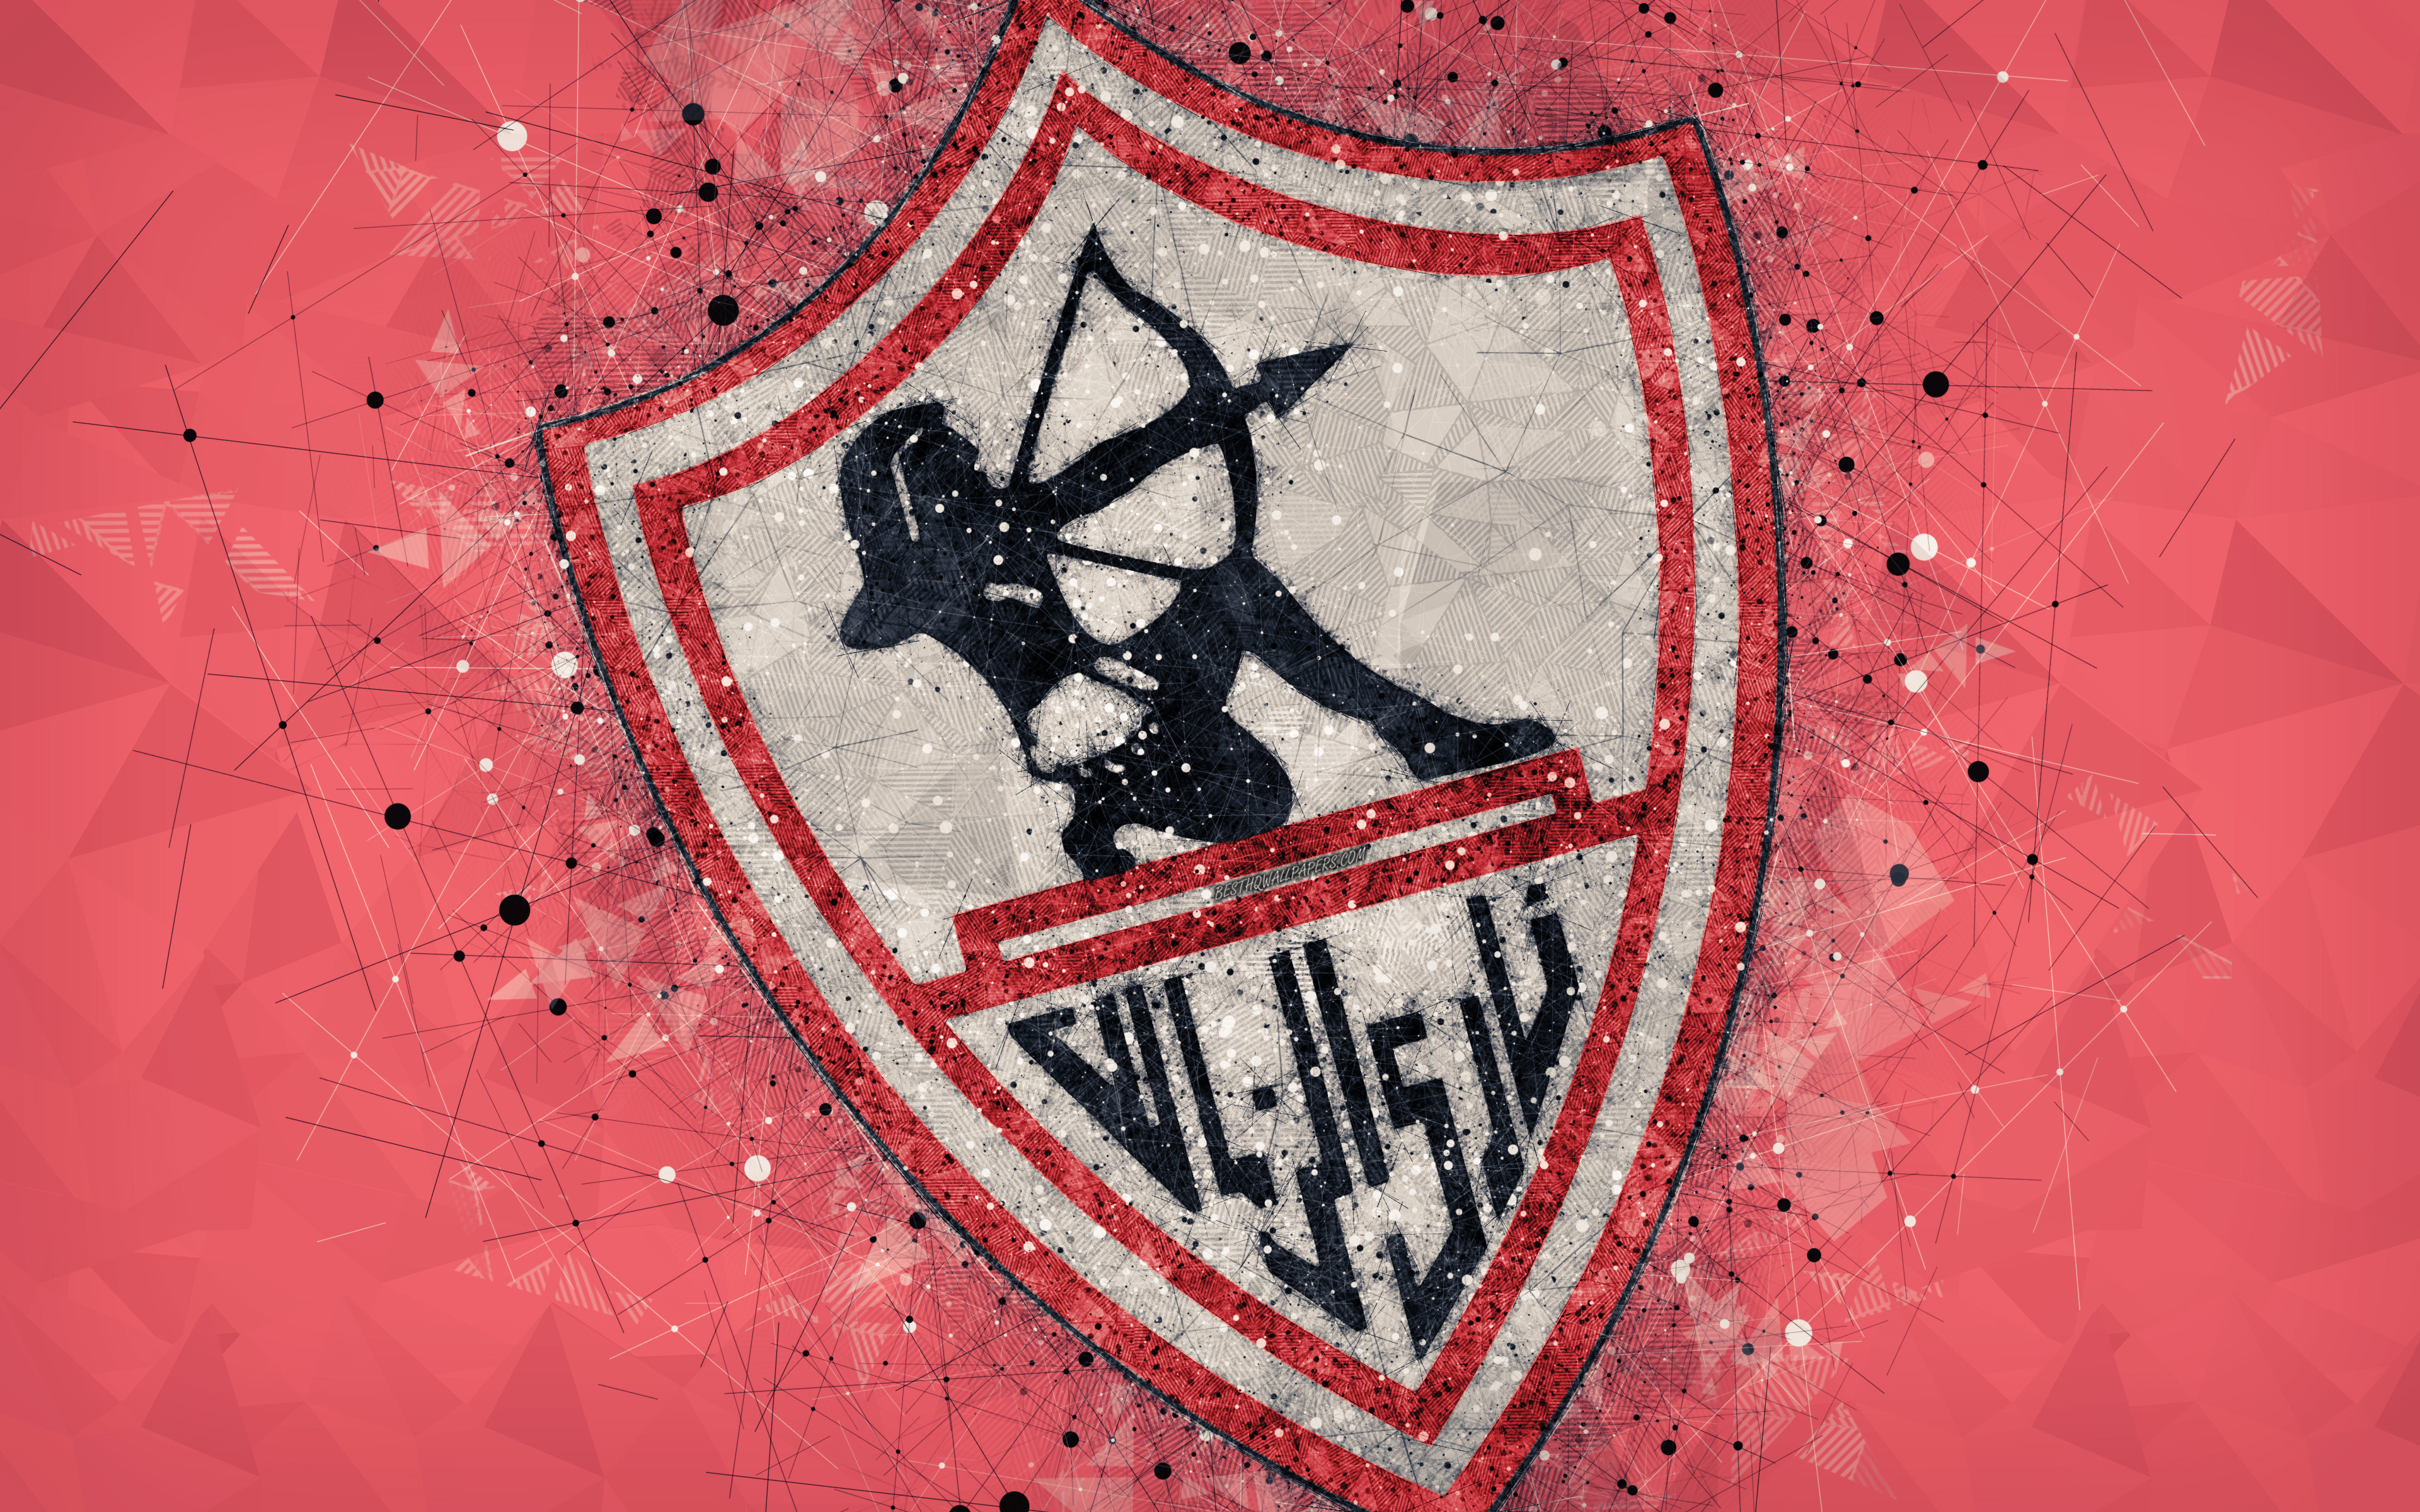 Sports Zamalek SC HD Wallpaper | Background Image